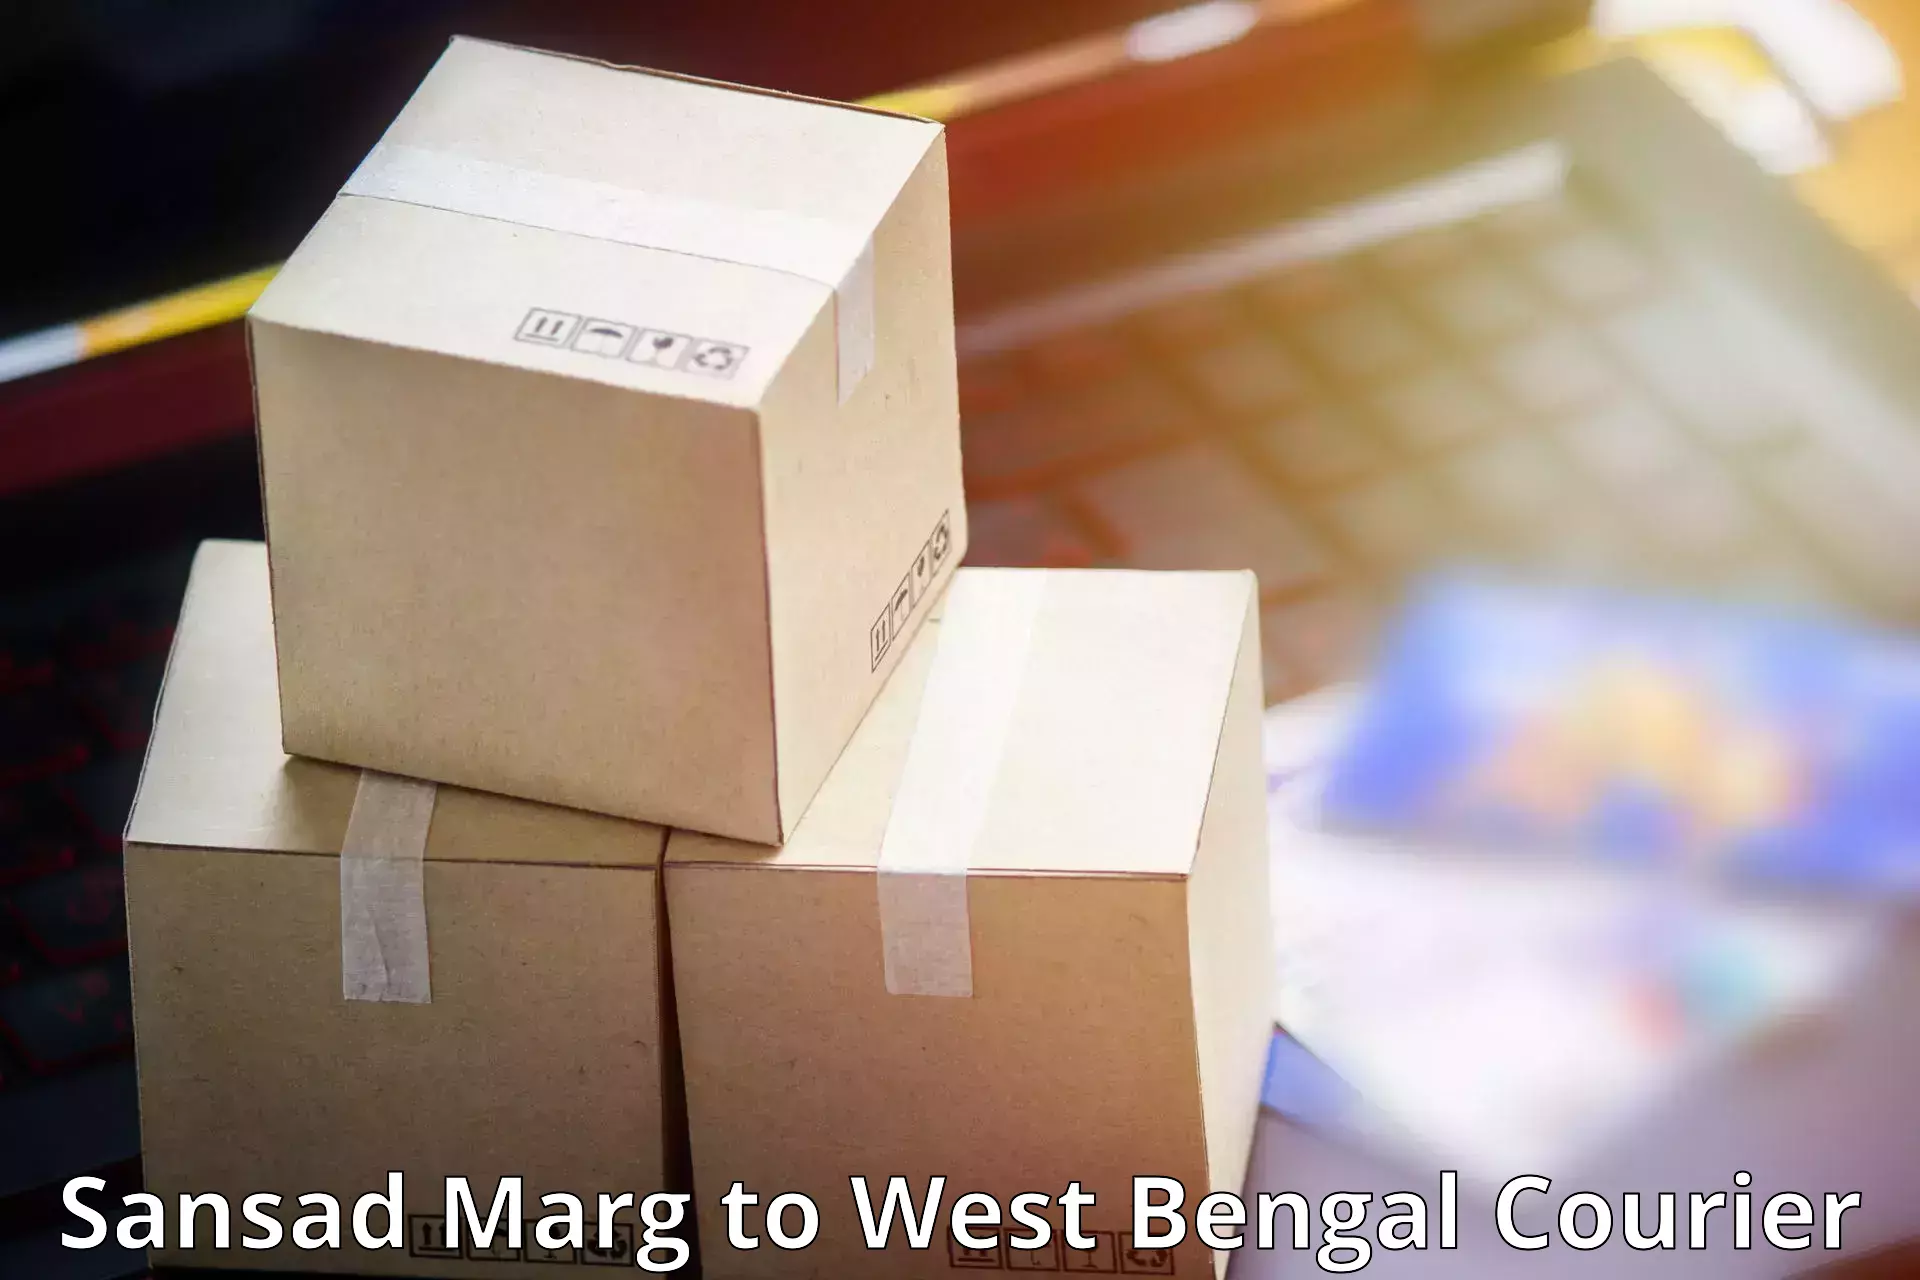 Courier service innovation Sansad Marg to Balurghat